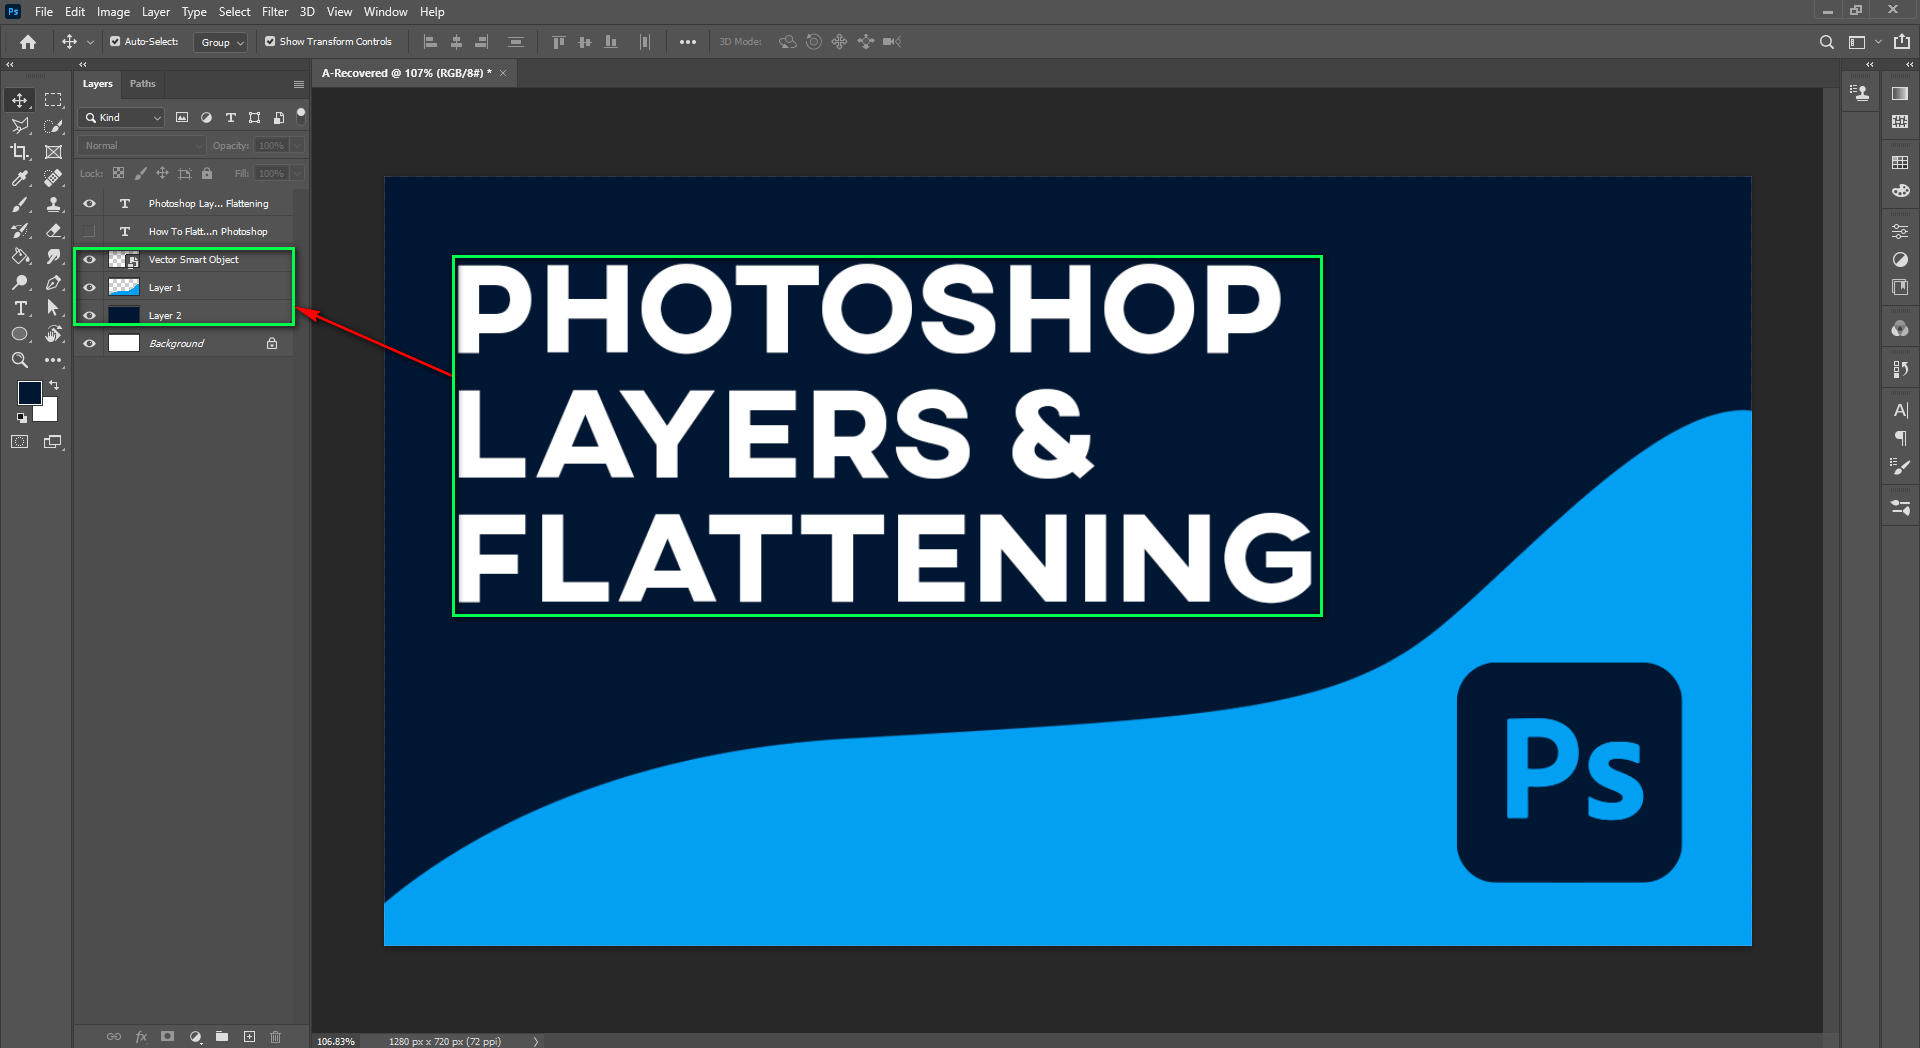 Photoshop Layers & Flattening